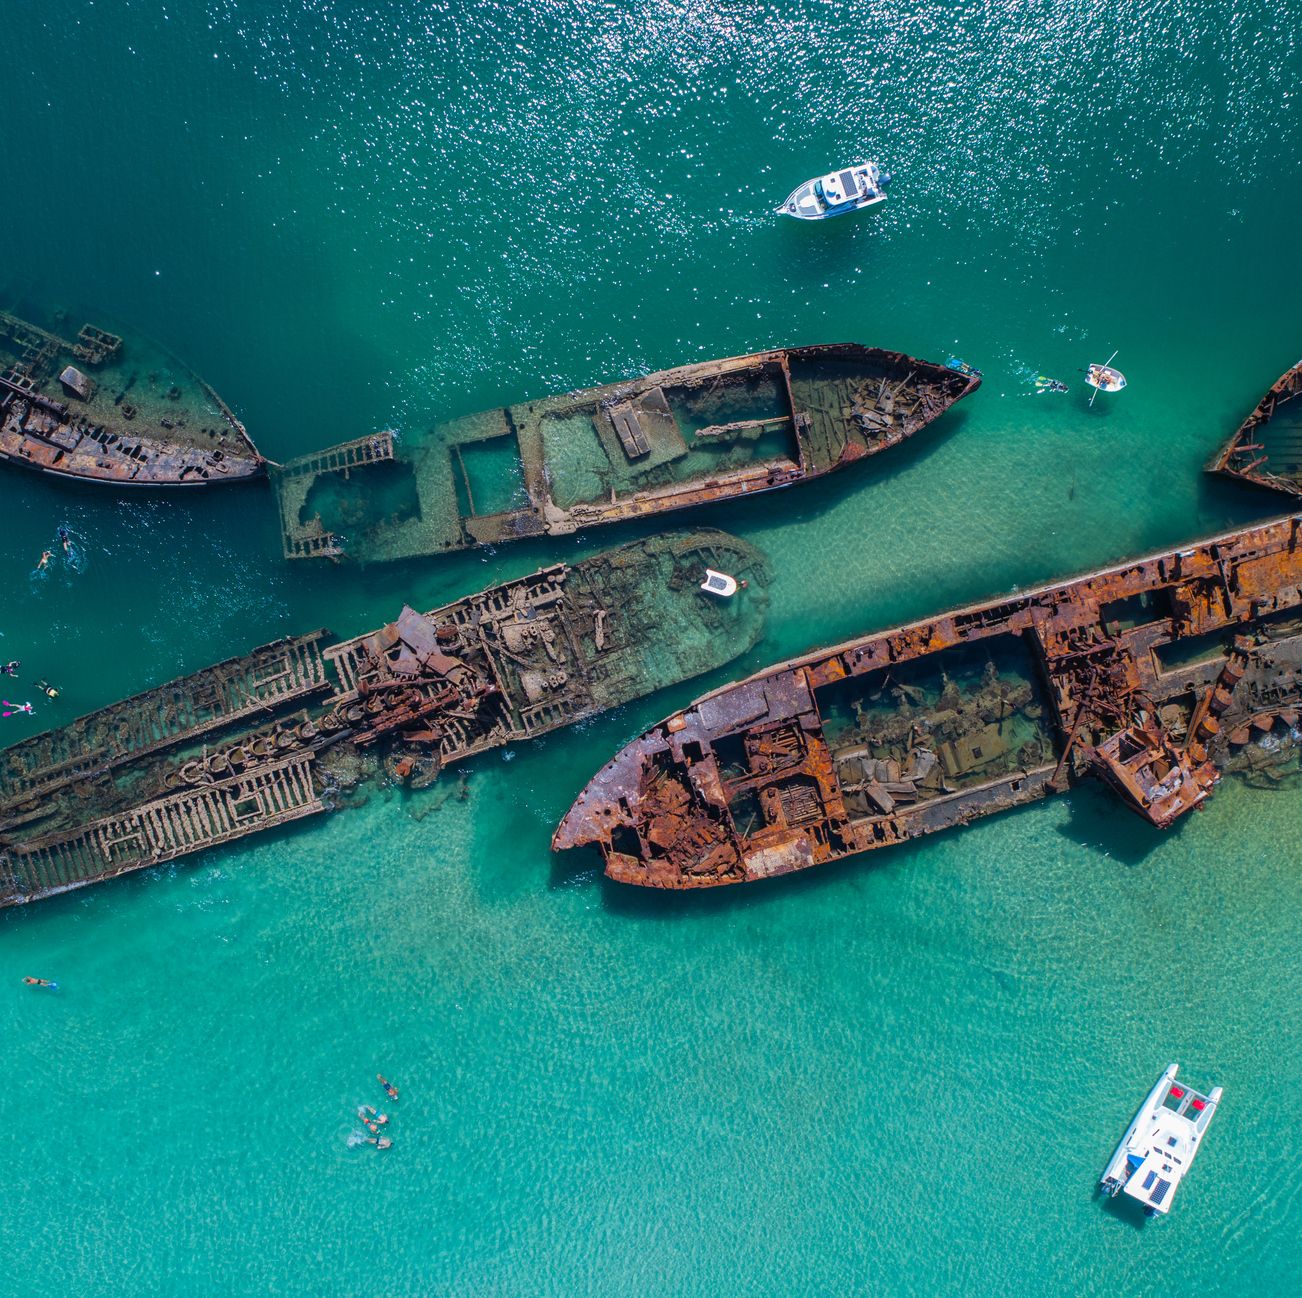 sunken ships in the caribbean